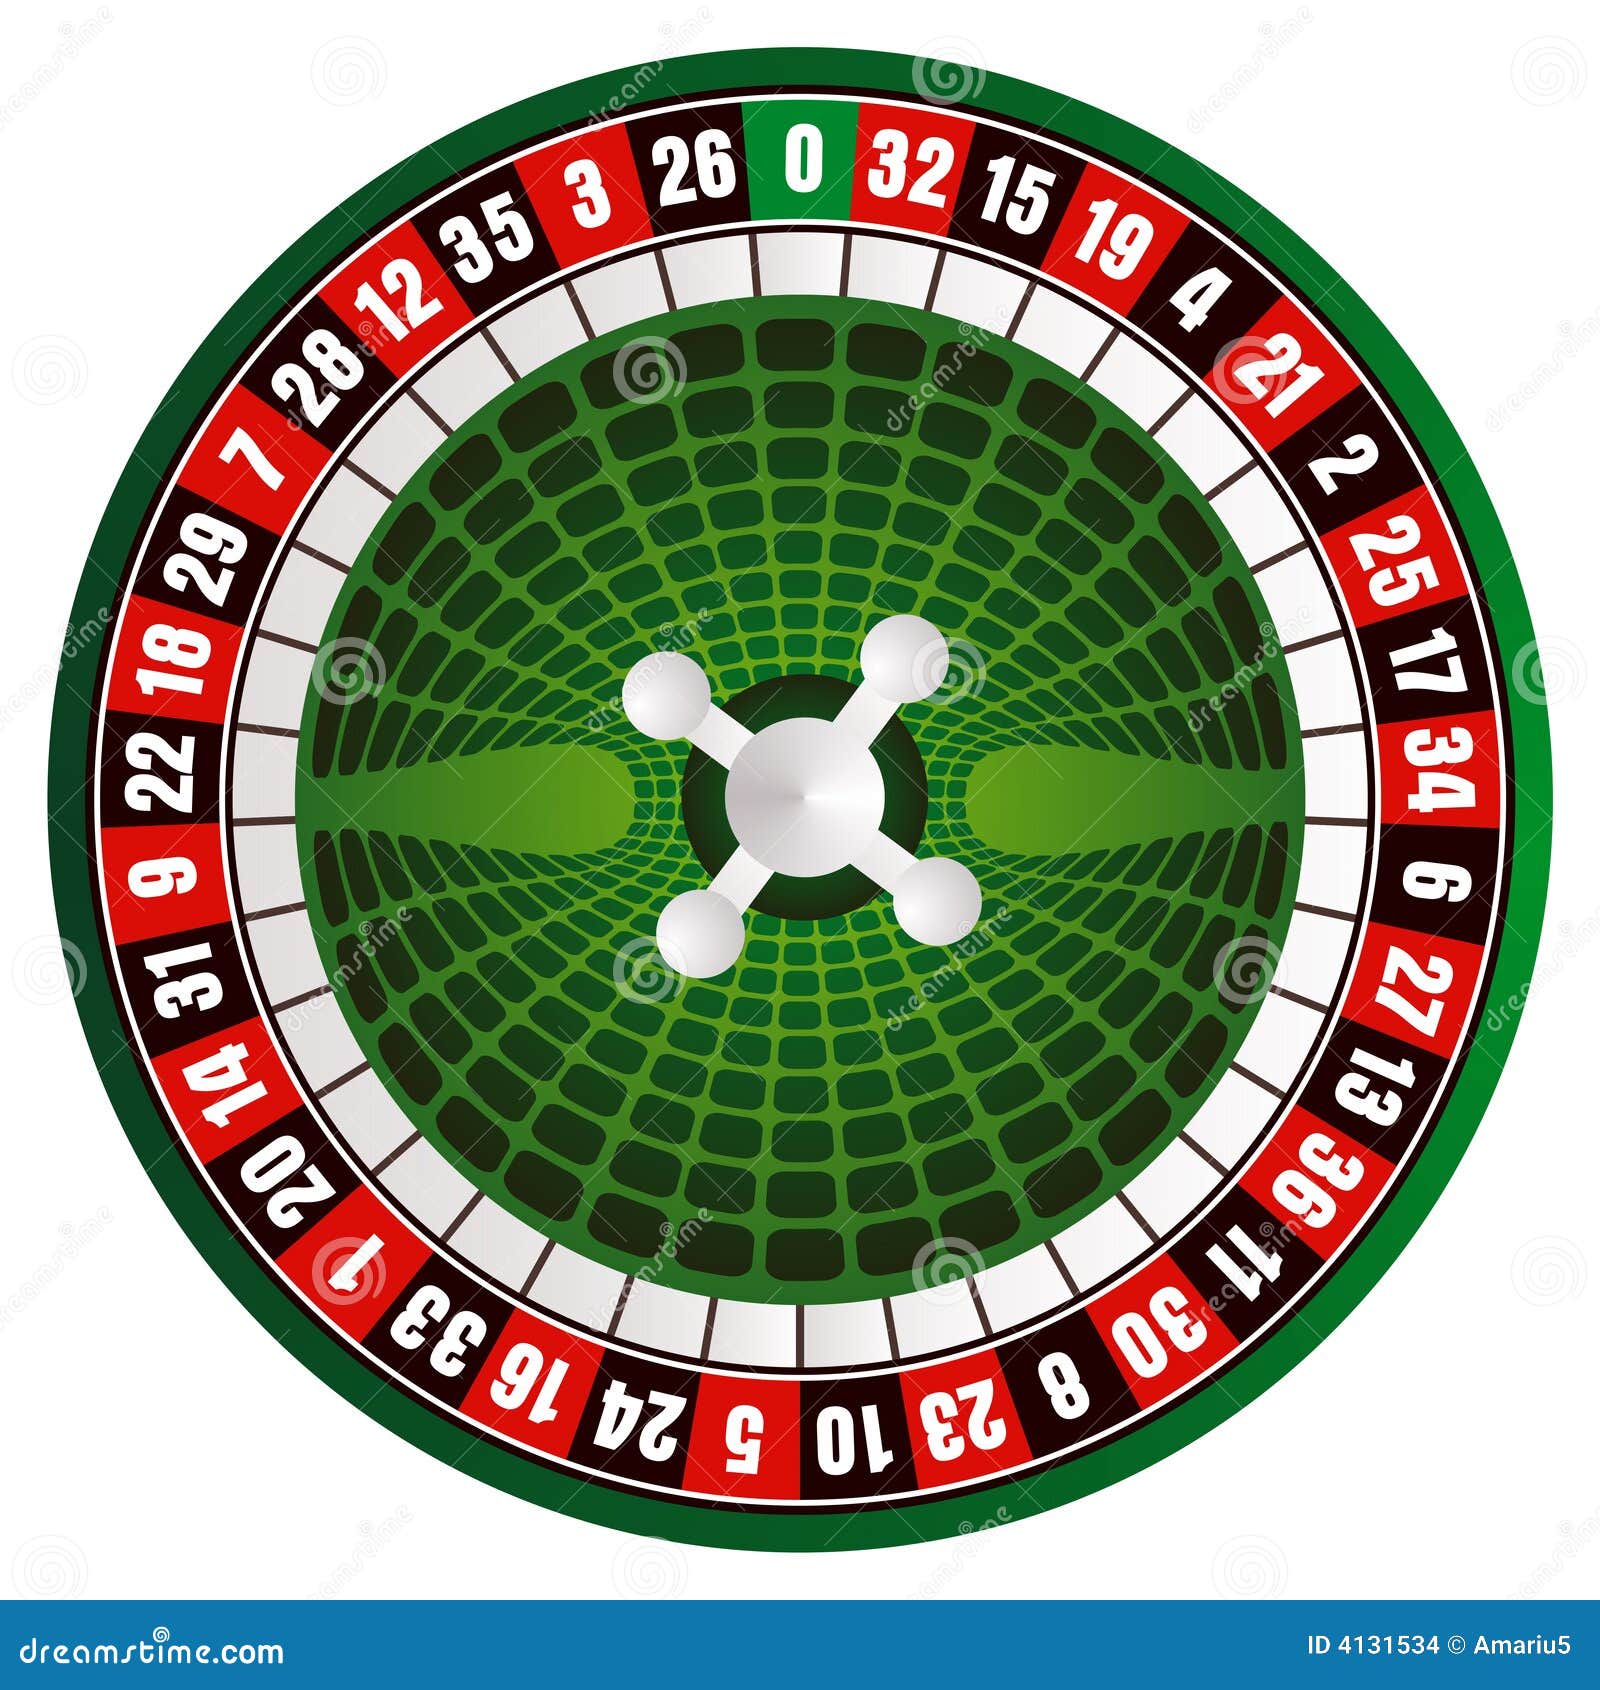 Bgo casino 20 free spins